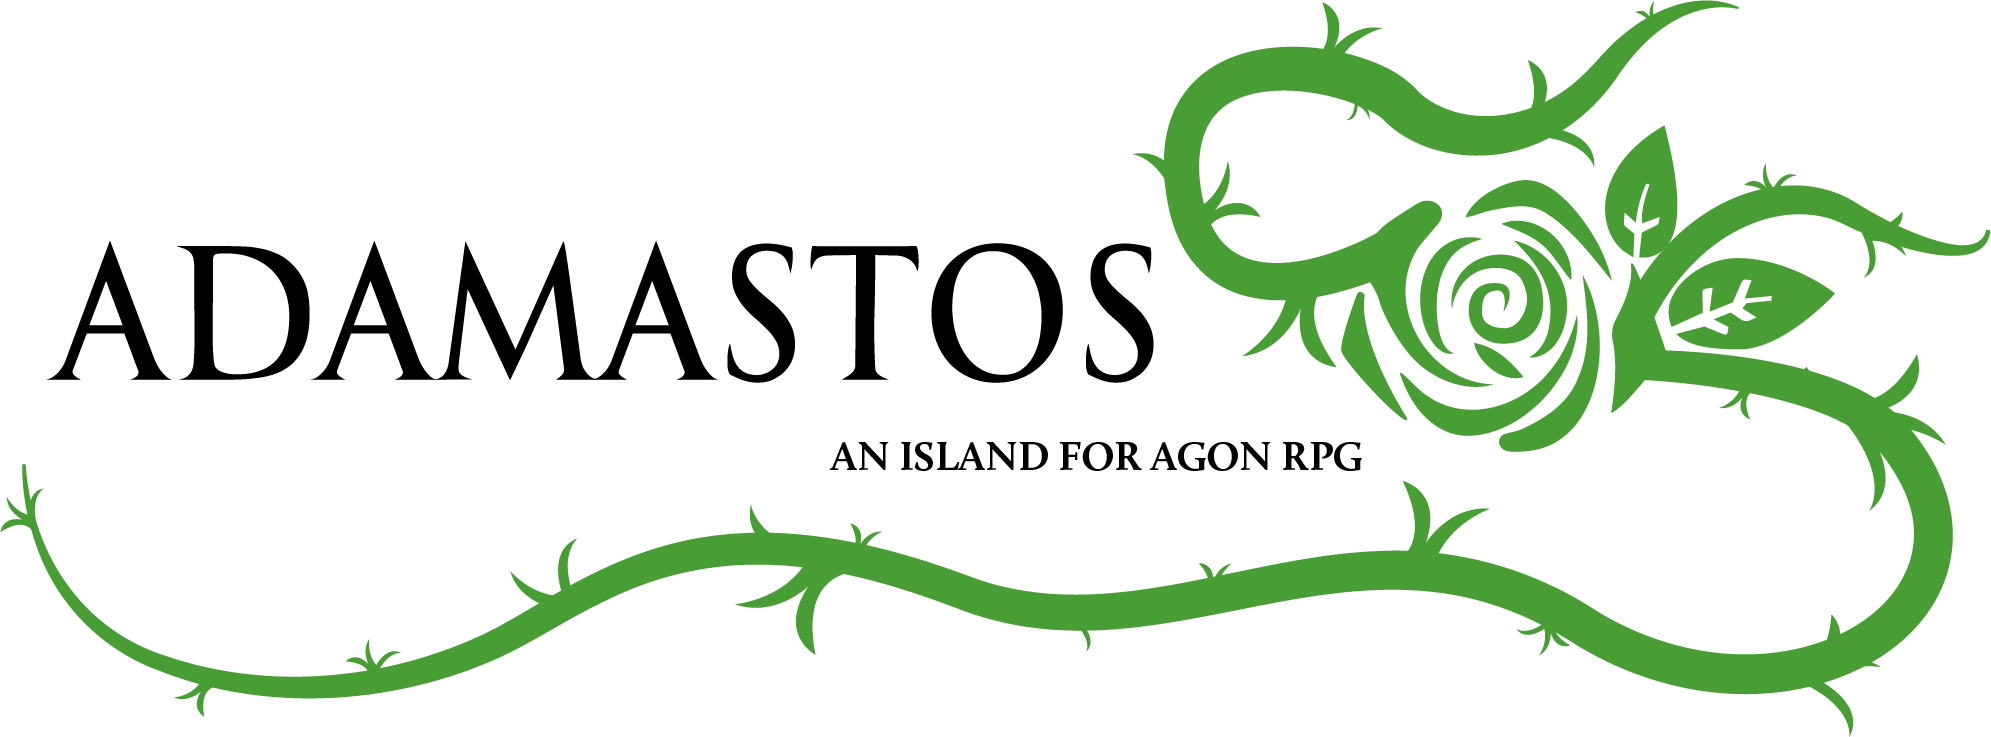 ADAMASTOS - An Island for AGON RPG